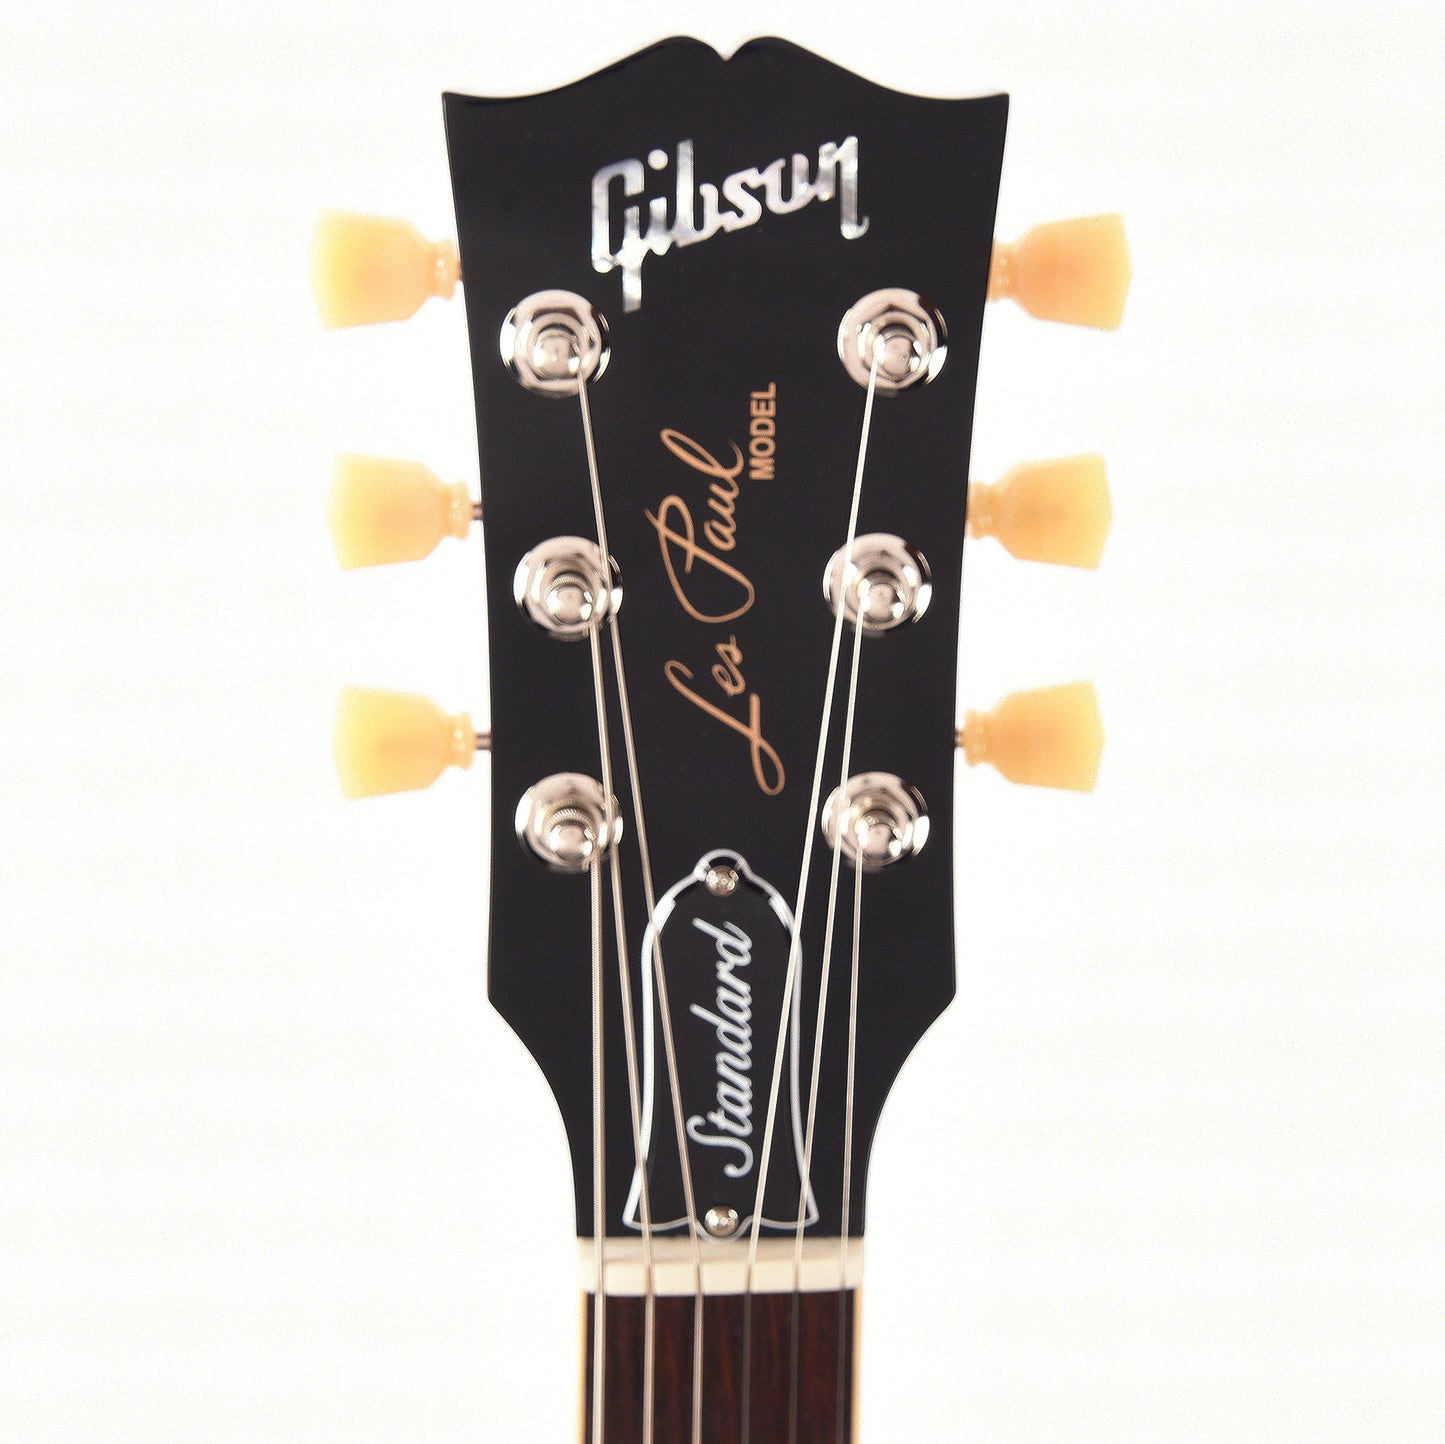 Gibson Original Les Paul Standard '50s Heritage Cherry Sunburst